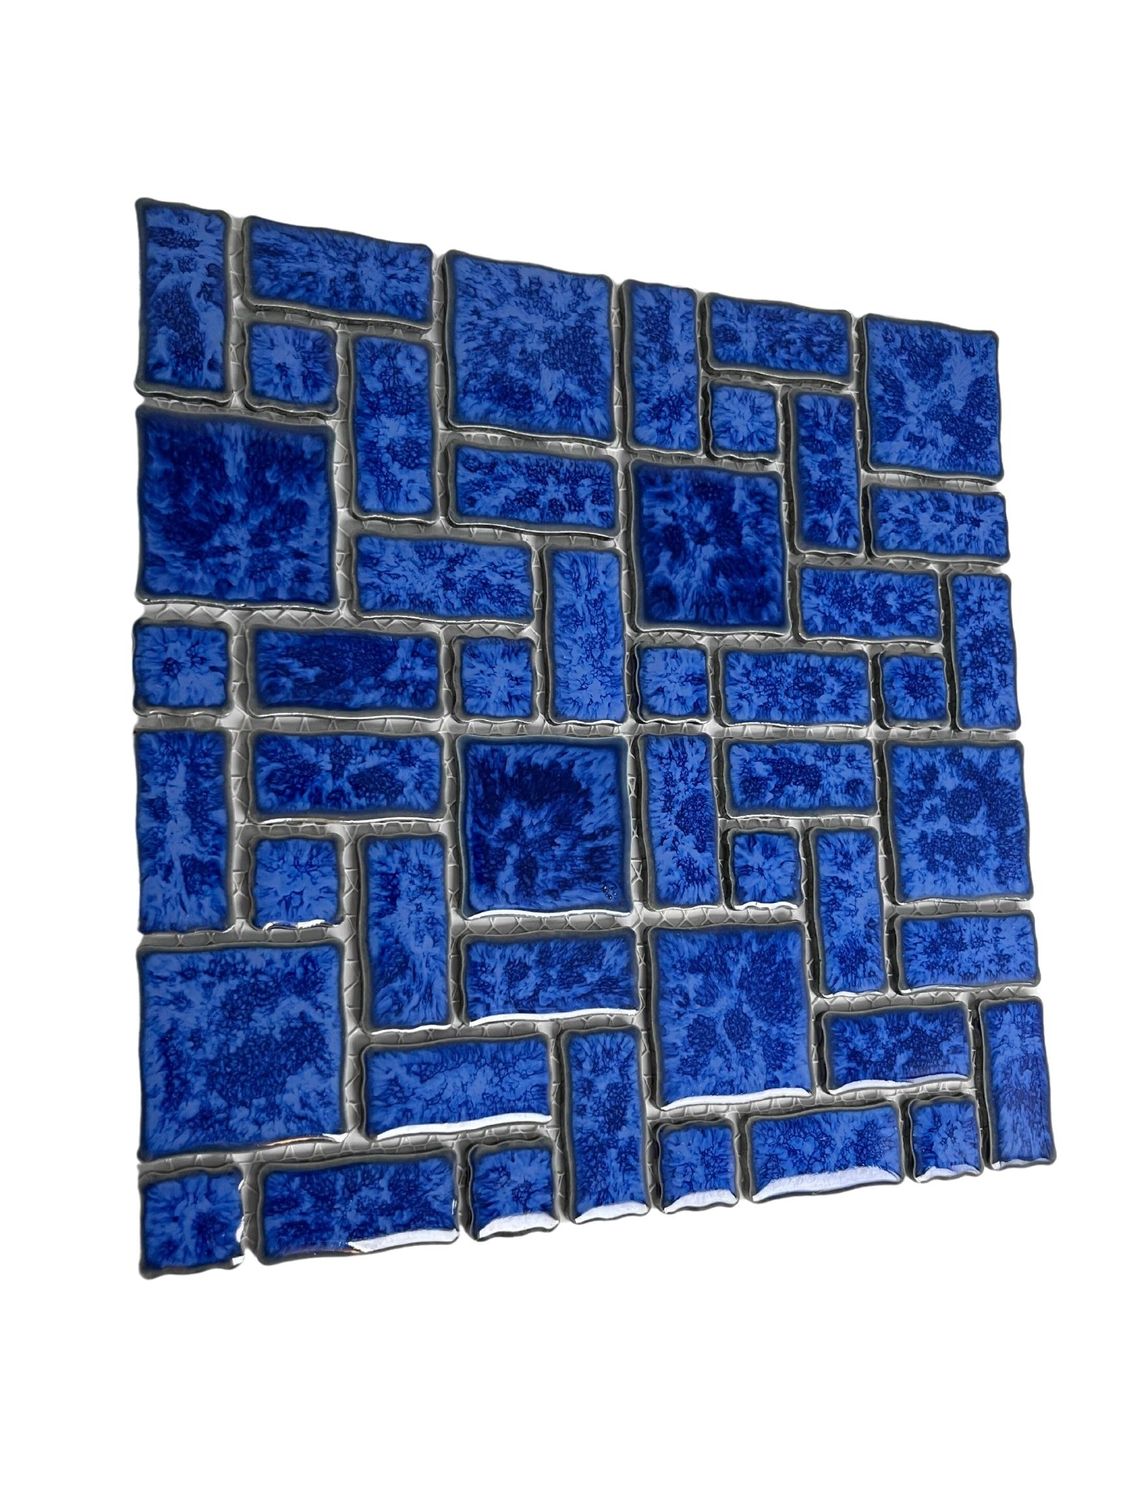 T‎PACFD-RDM-PL Ultramarine Blue Random Sized Wavy Edges Porcelain Glazed Pool Mosaic Floor and Wall Tile for Backsplash, Kitchen, Bathroom, Swimming Pool